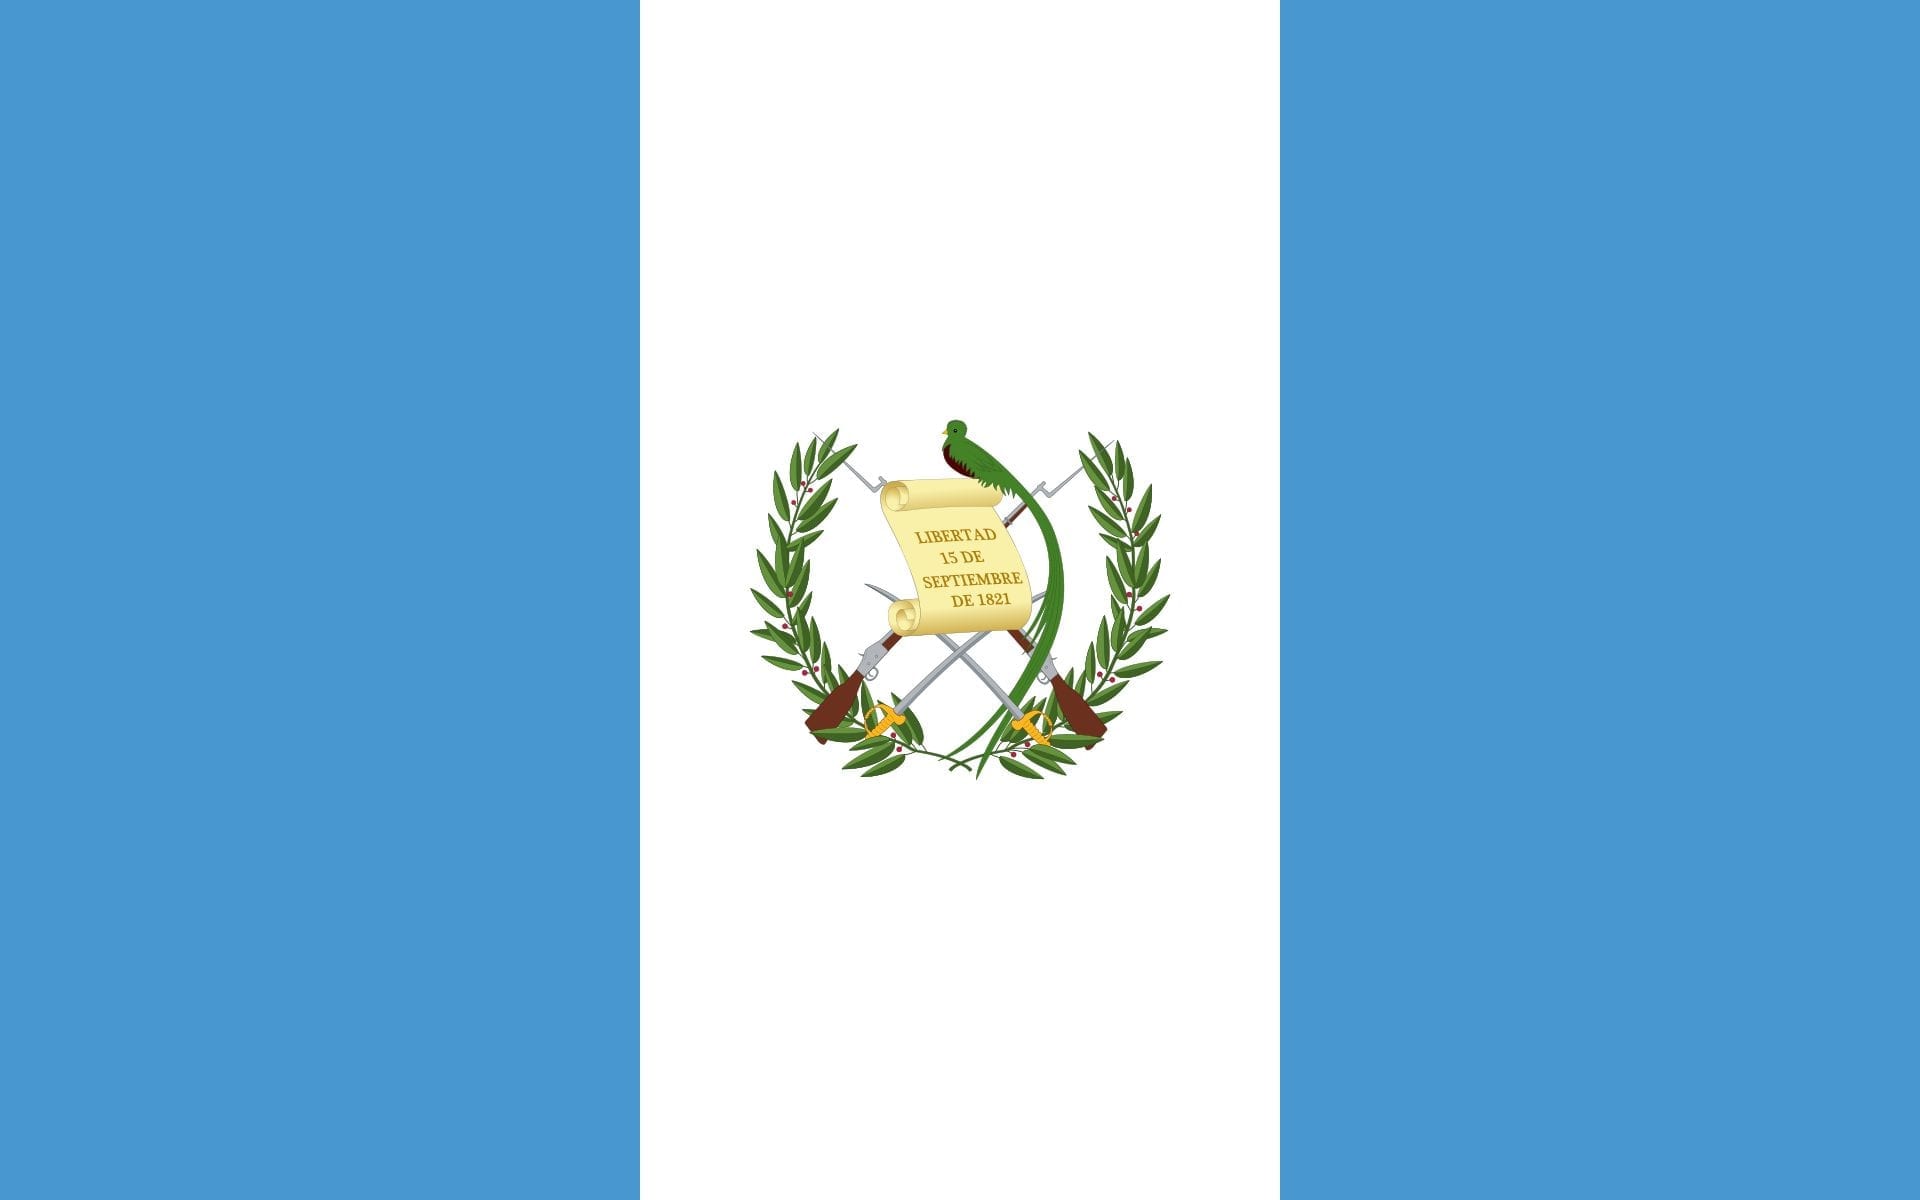 Facts of Guatemala